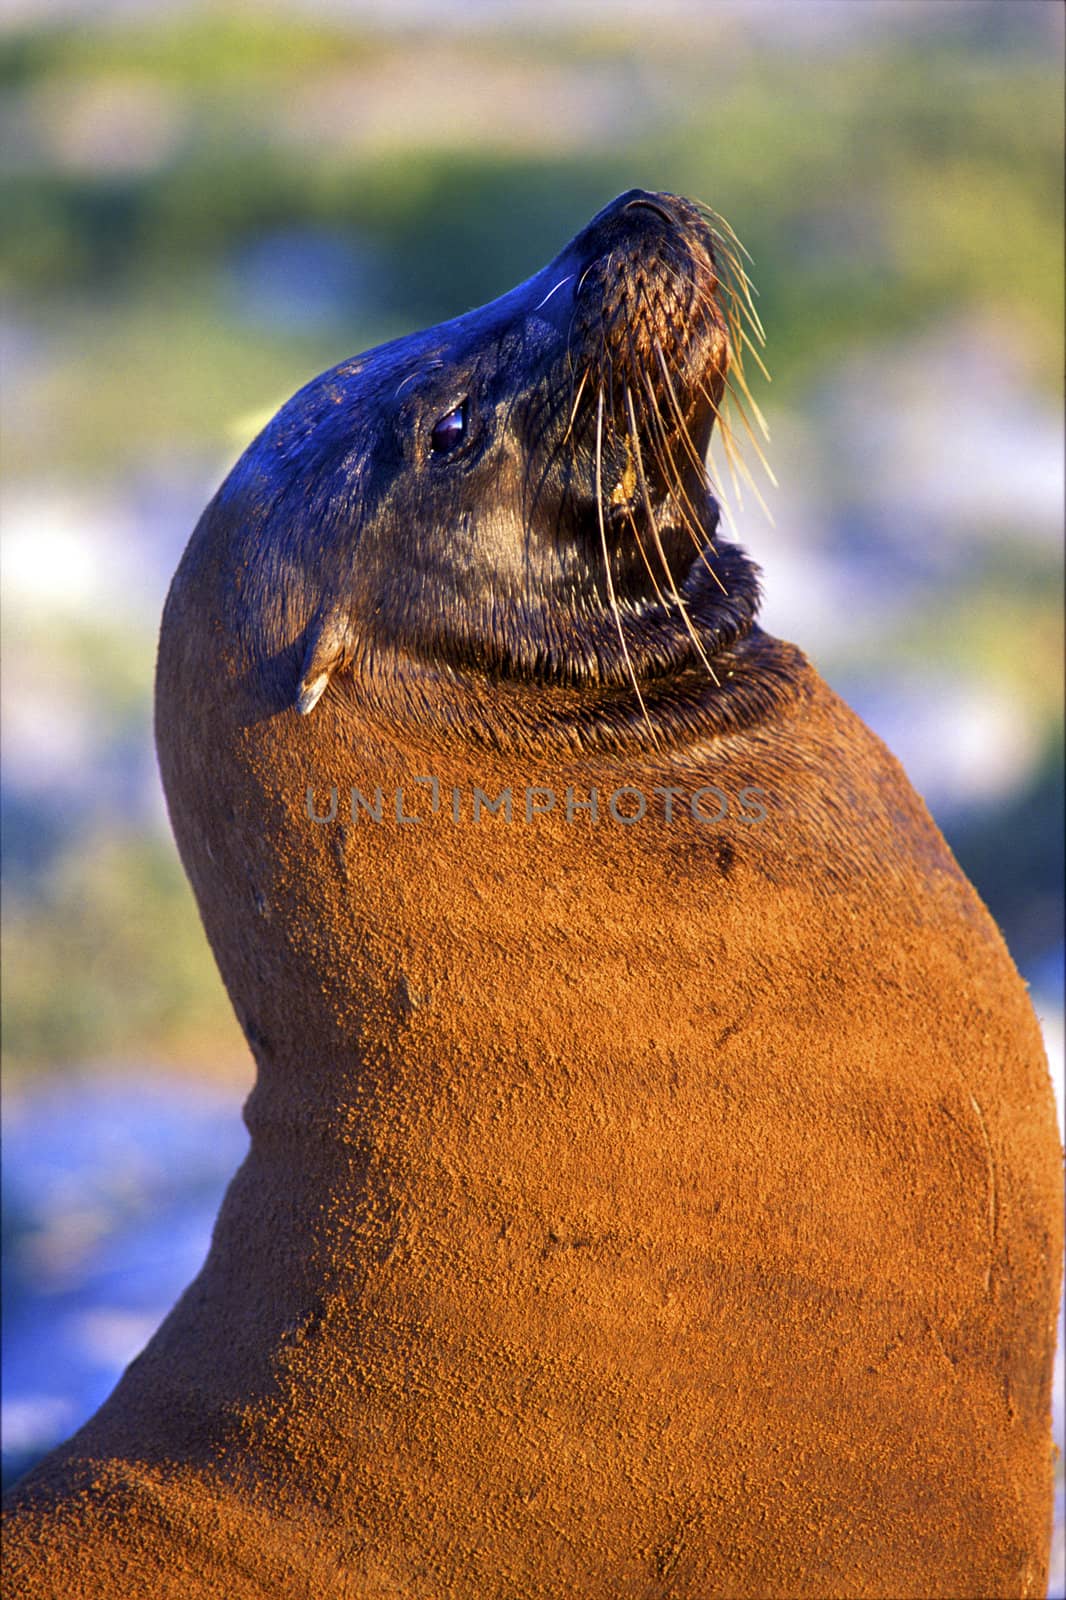 Galapagos Fur Seal Arctocephalus Galapagoensis Galapagos Islands, Ecuador eastern Pacific Ocean by hotflash2001